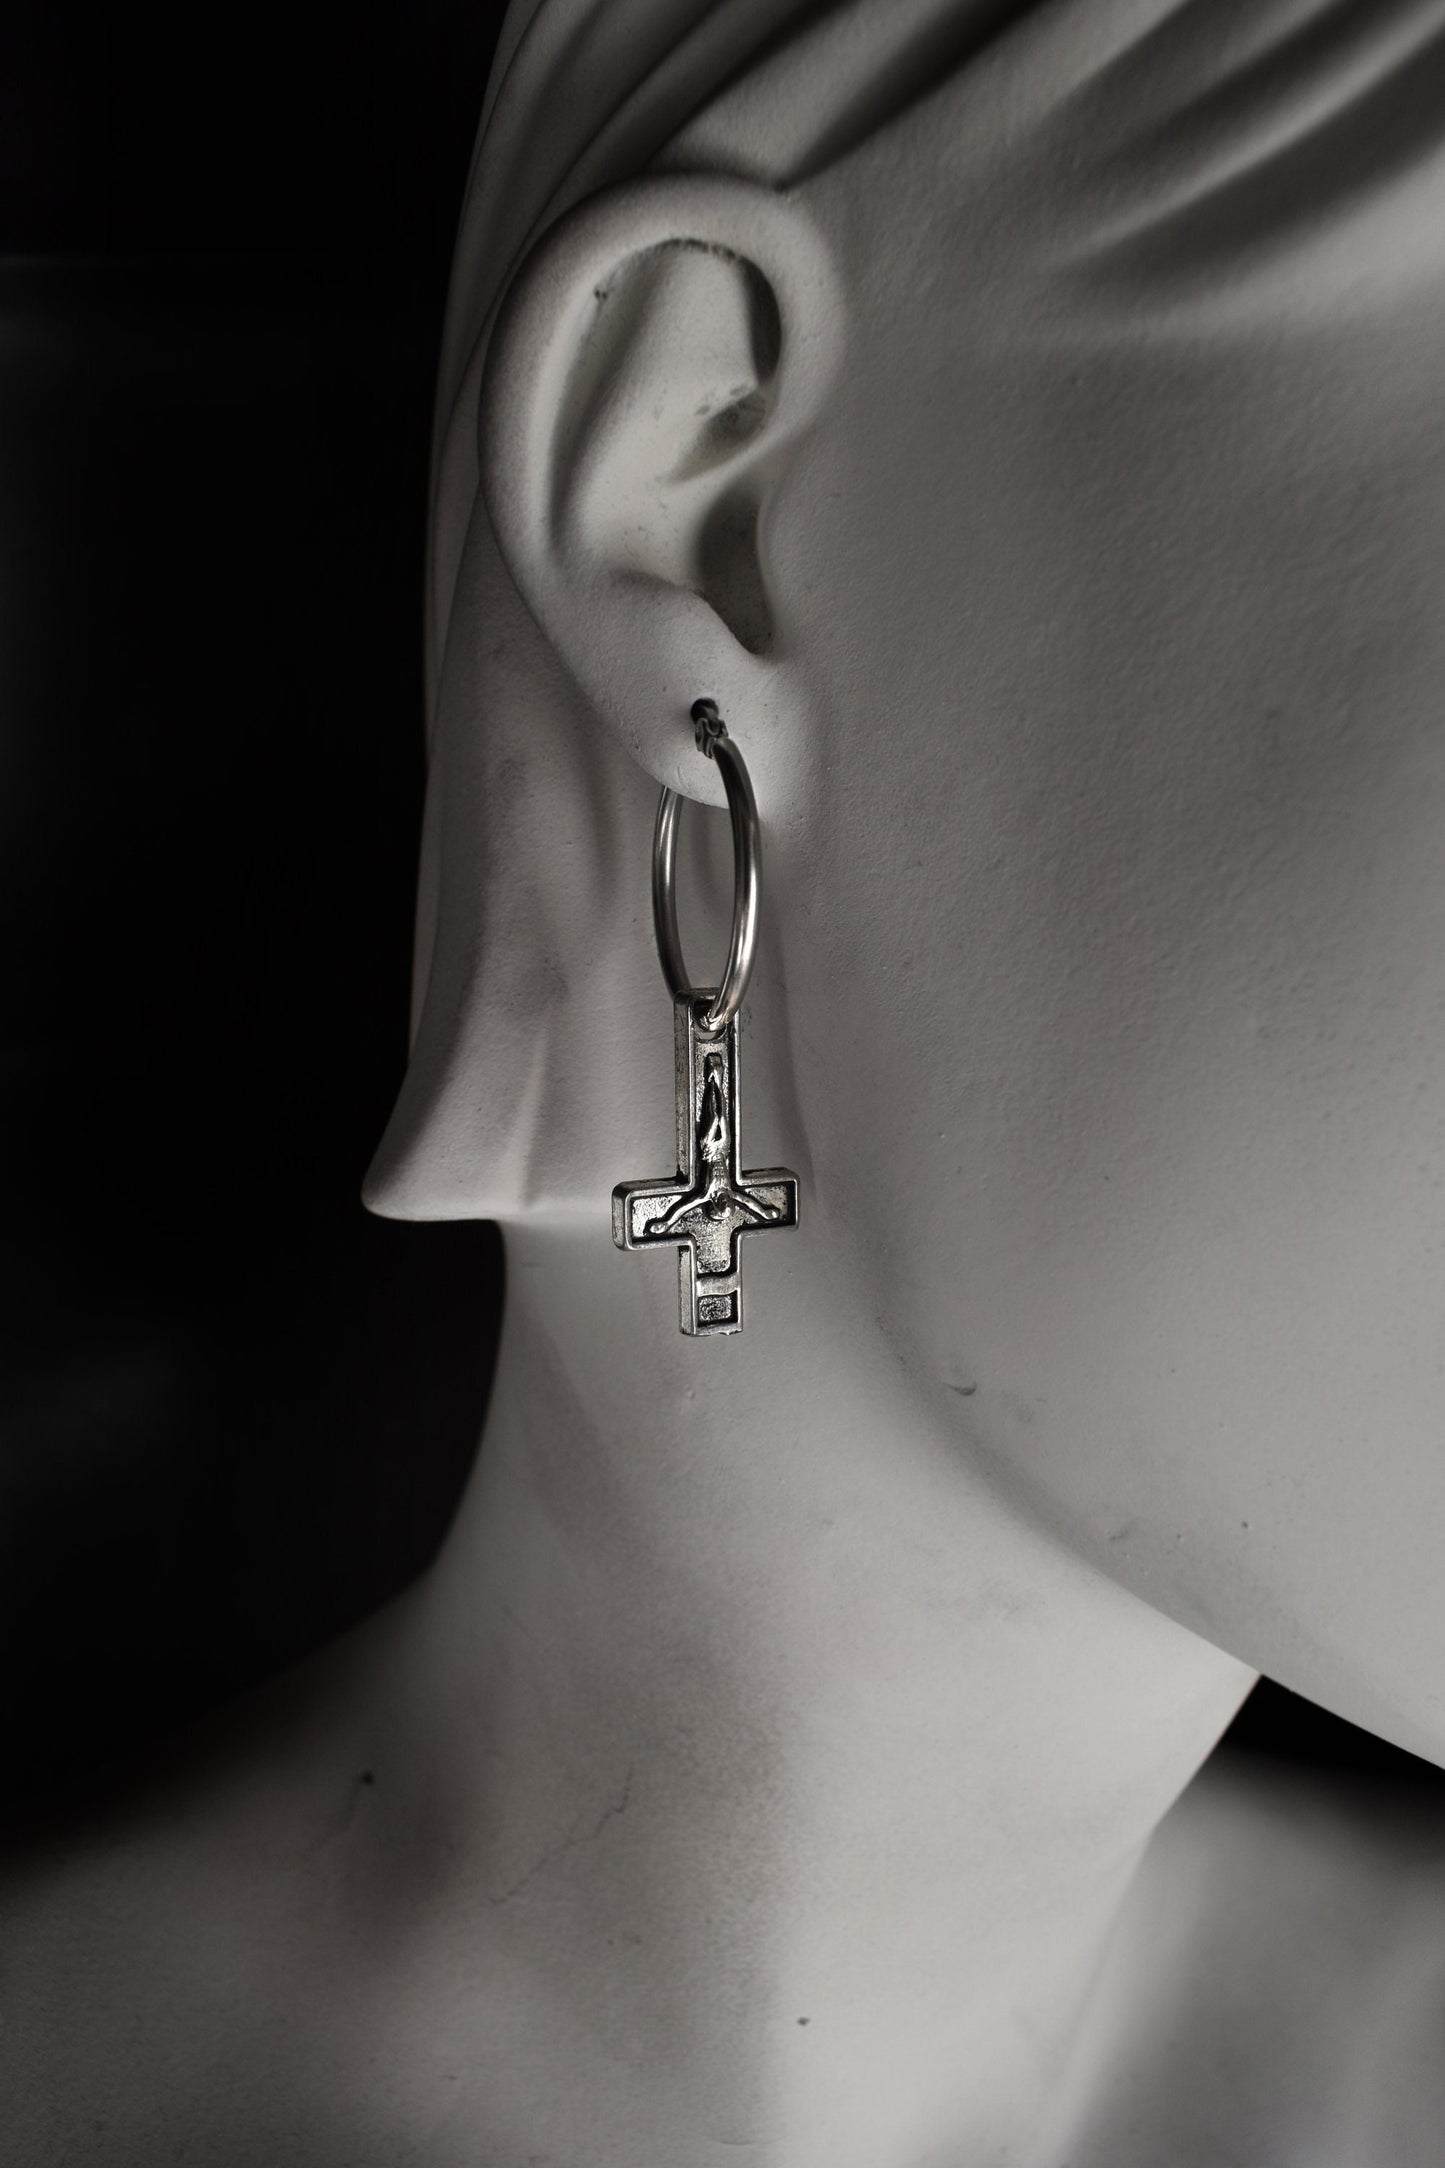 Pair of Stainless steel Inverted Cross earrings - Antichrist crucifix Satanic cross earrings